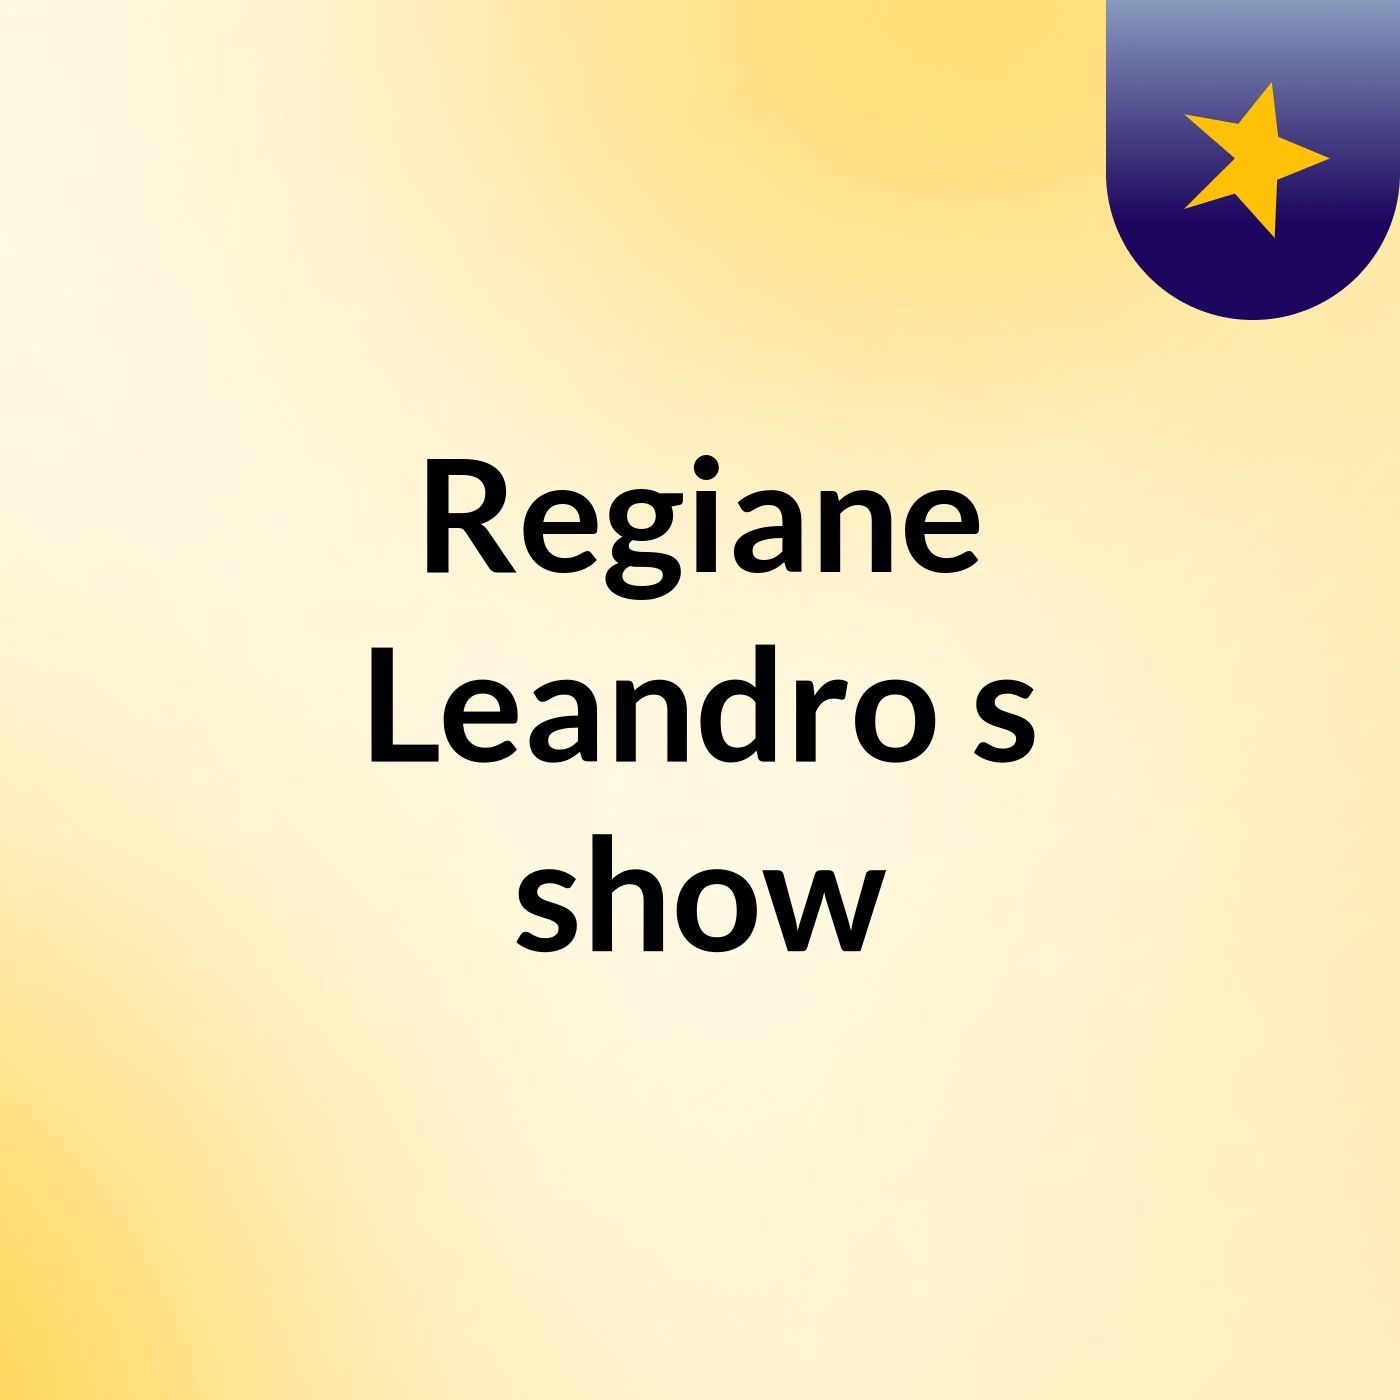 Regiane Leandro's show